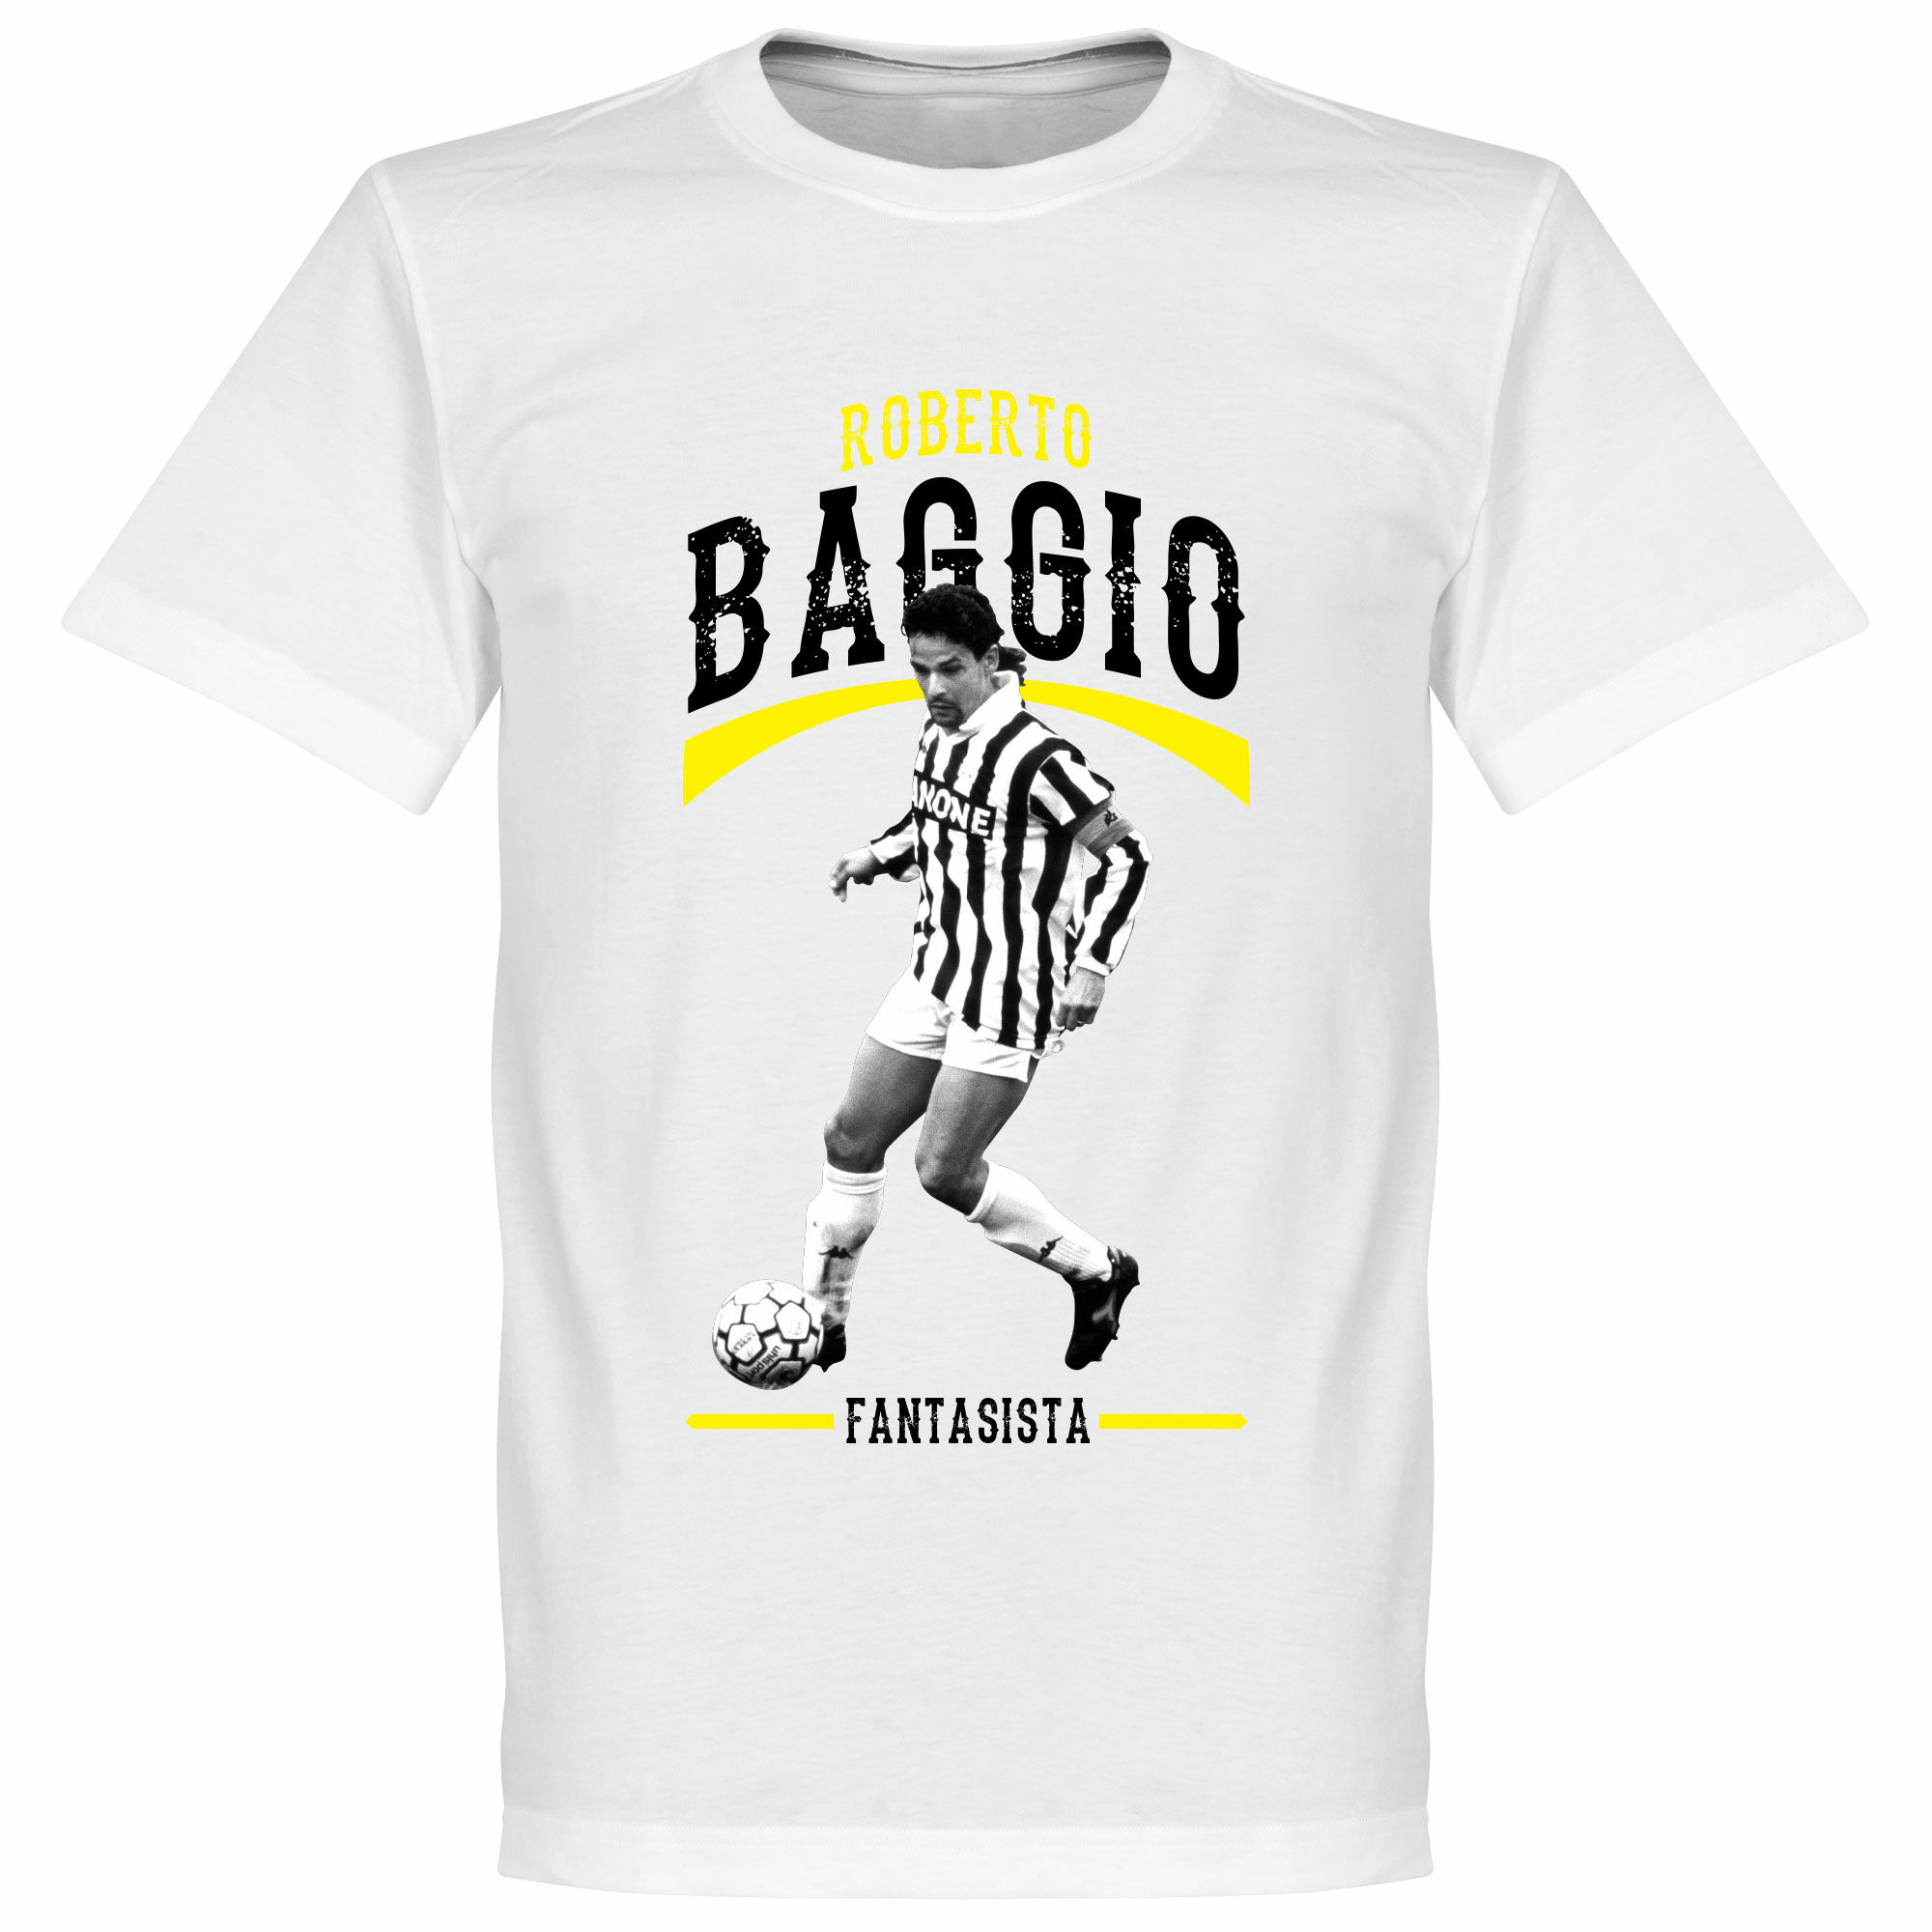 Juventus FC - Tričko "Fantasista" dětské - bílé, Roberto Baggio